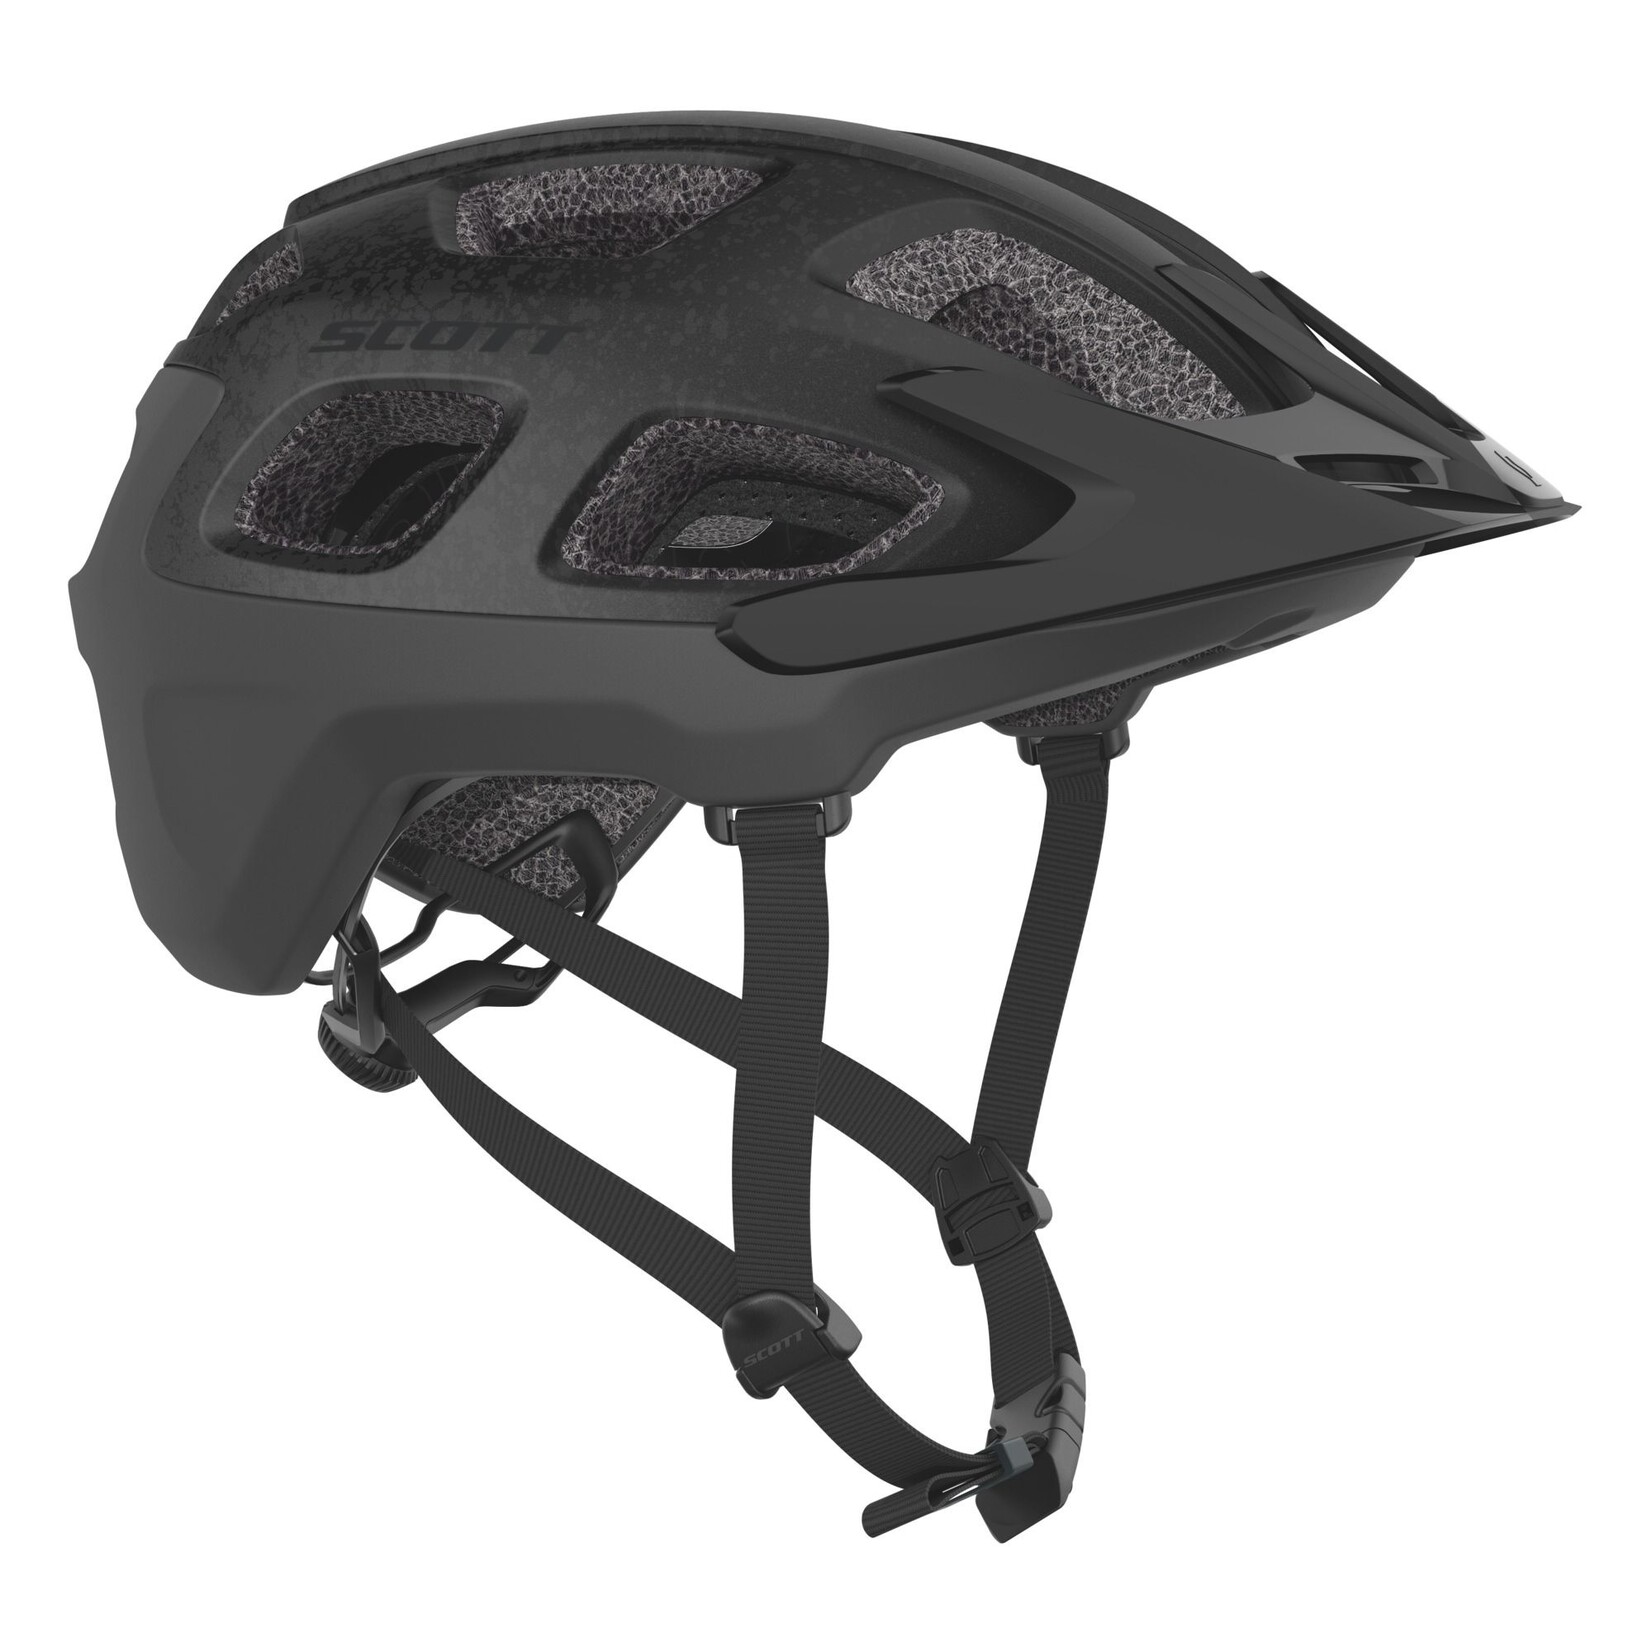 Scott Scott Vivo Plus Cycle Helmet